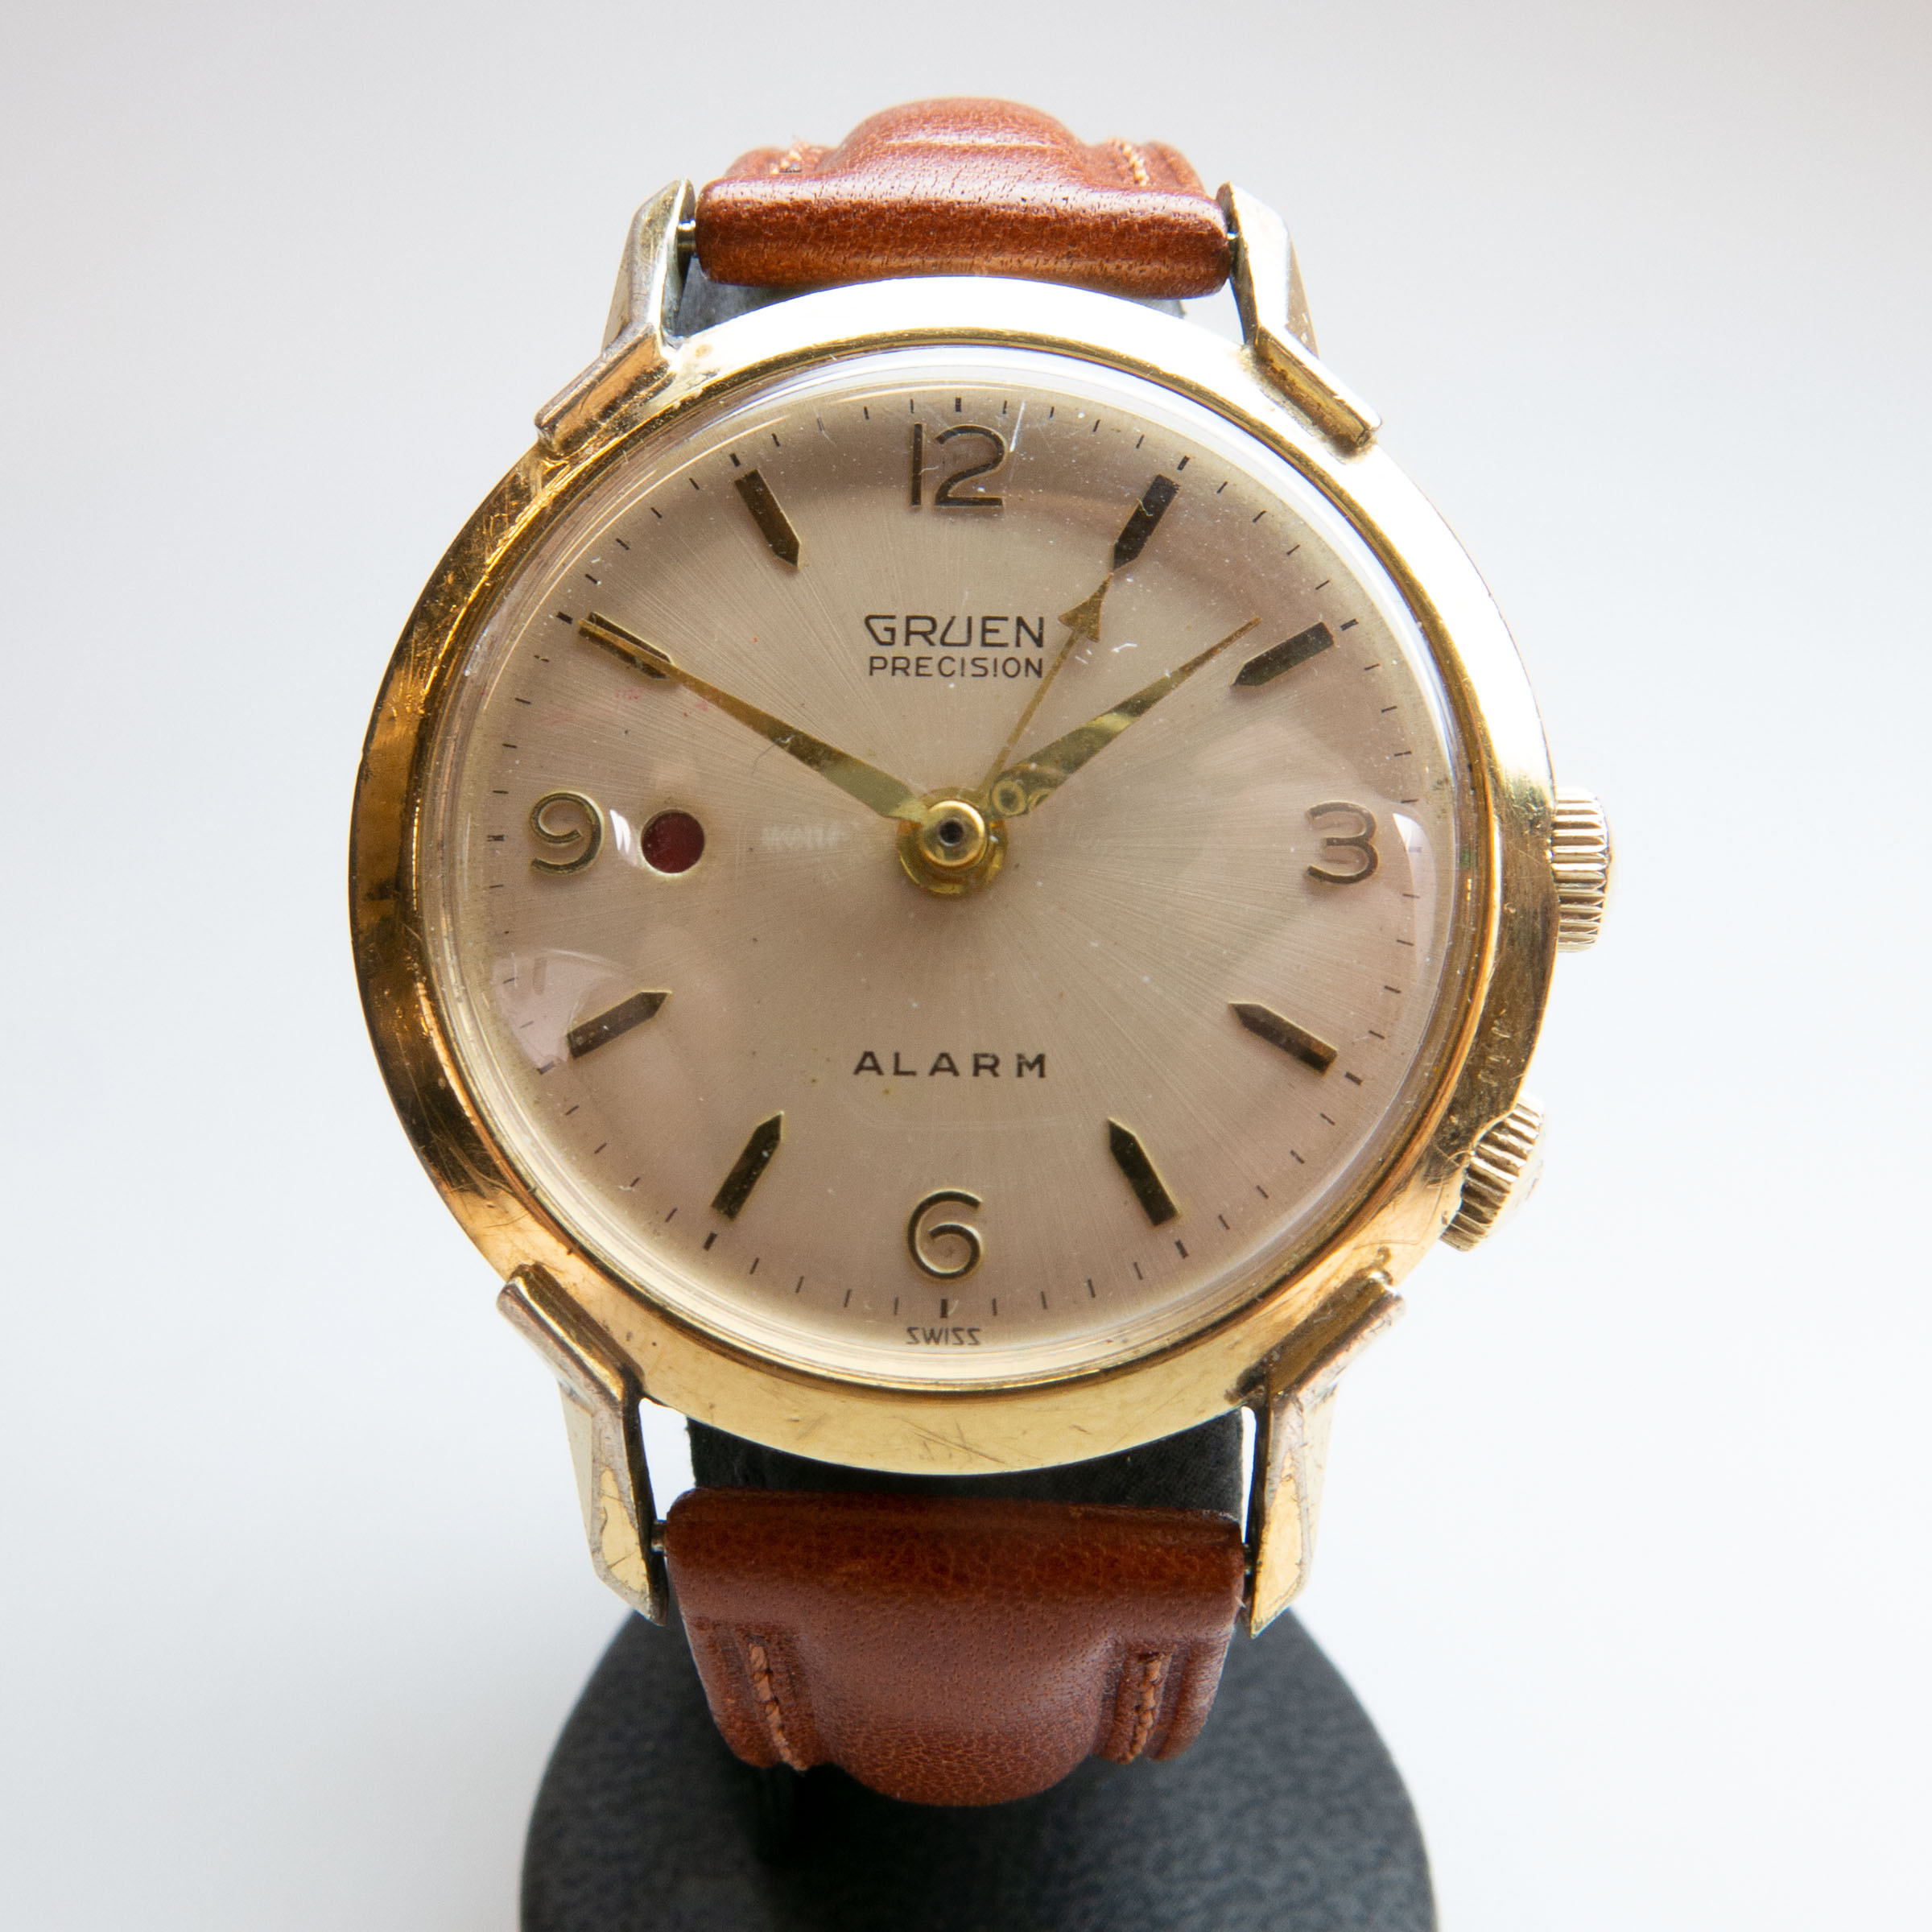 Gruen 'Precision' Wristwatch, With Alarm